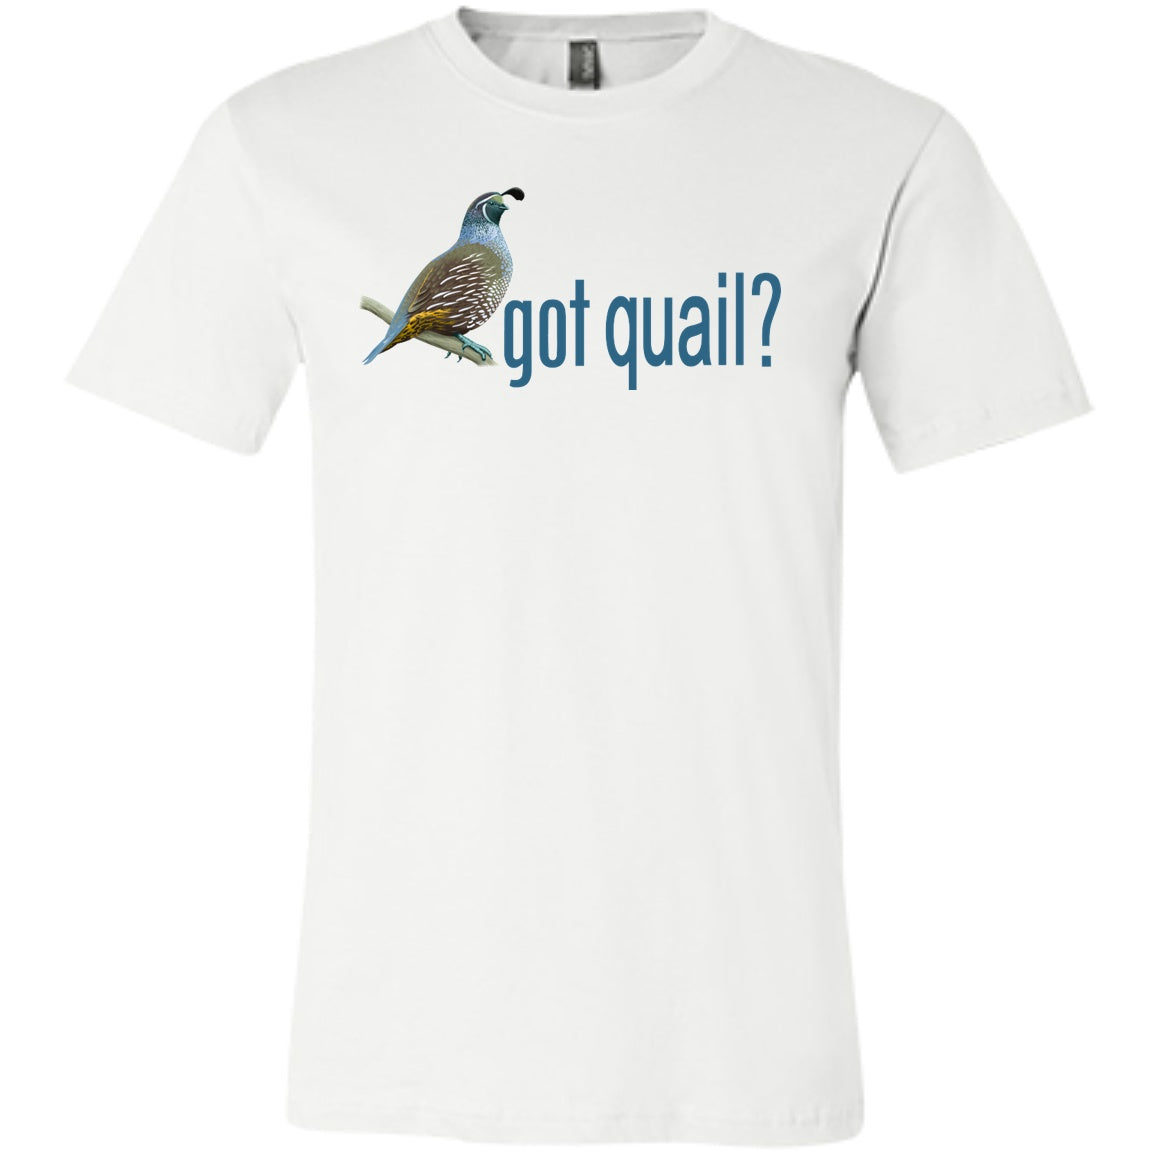 Got Quail? - Tees & Tanks - GoneBold.gift